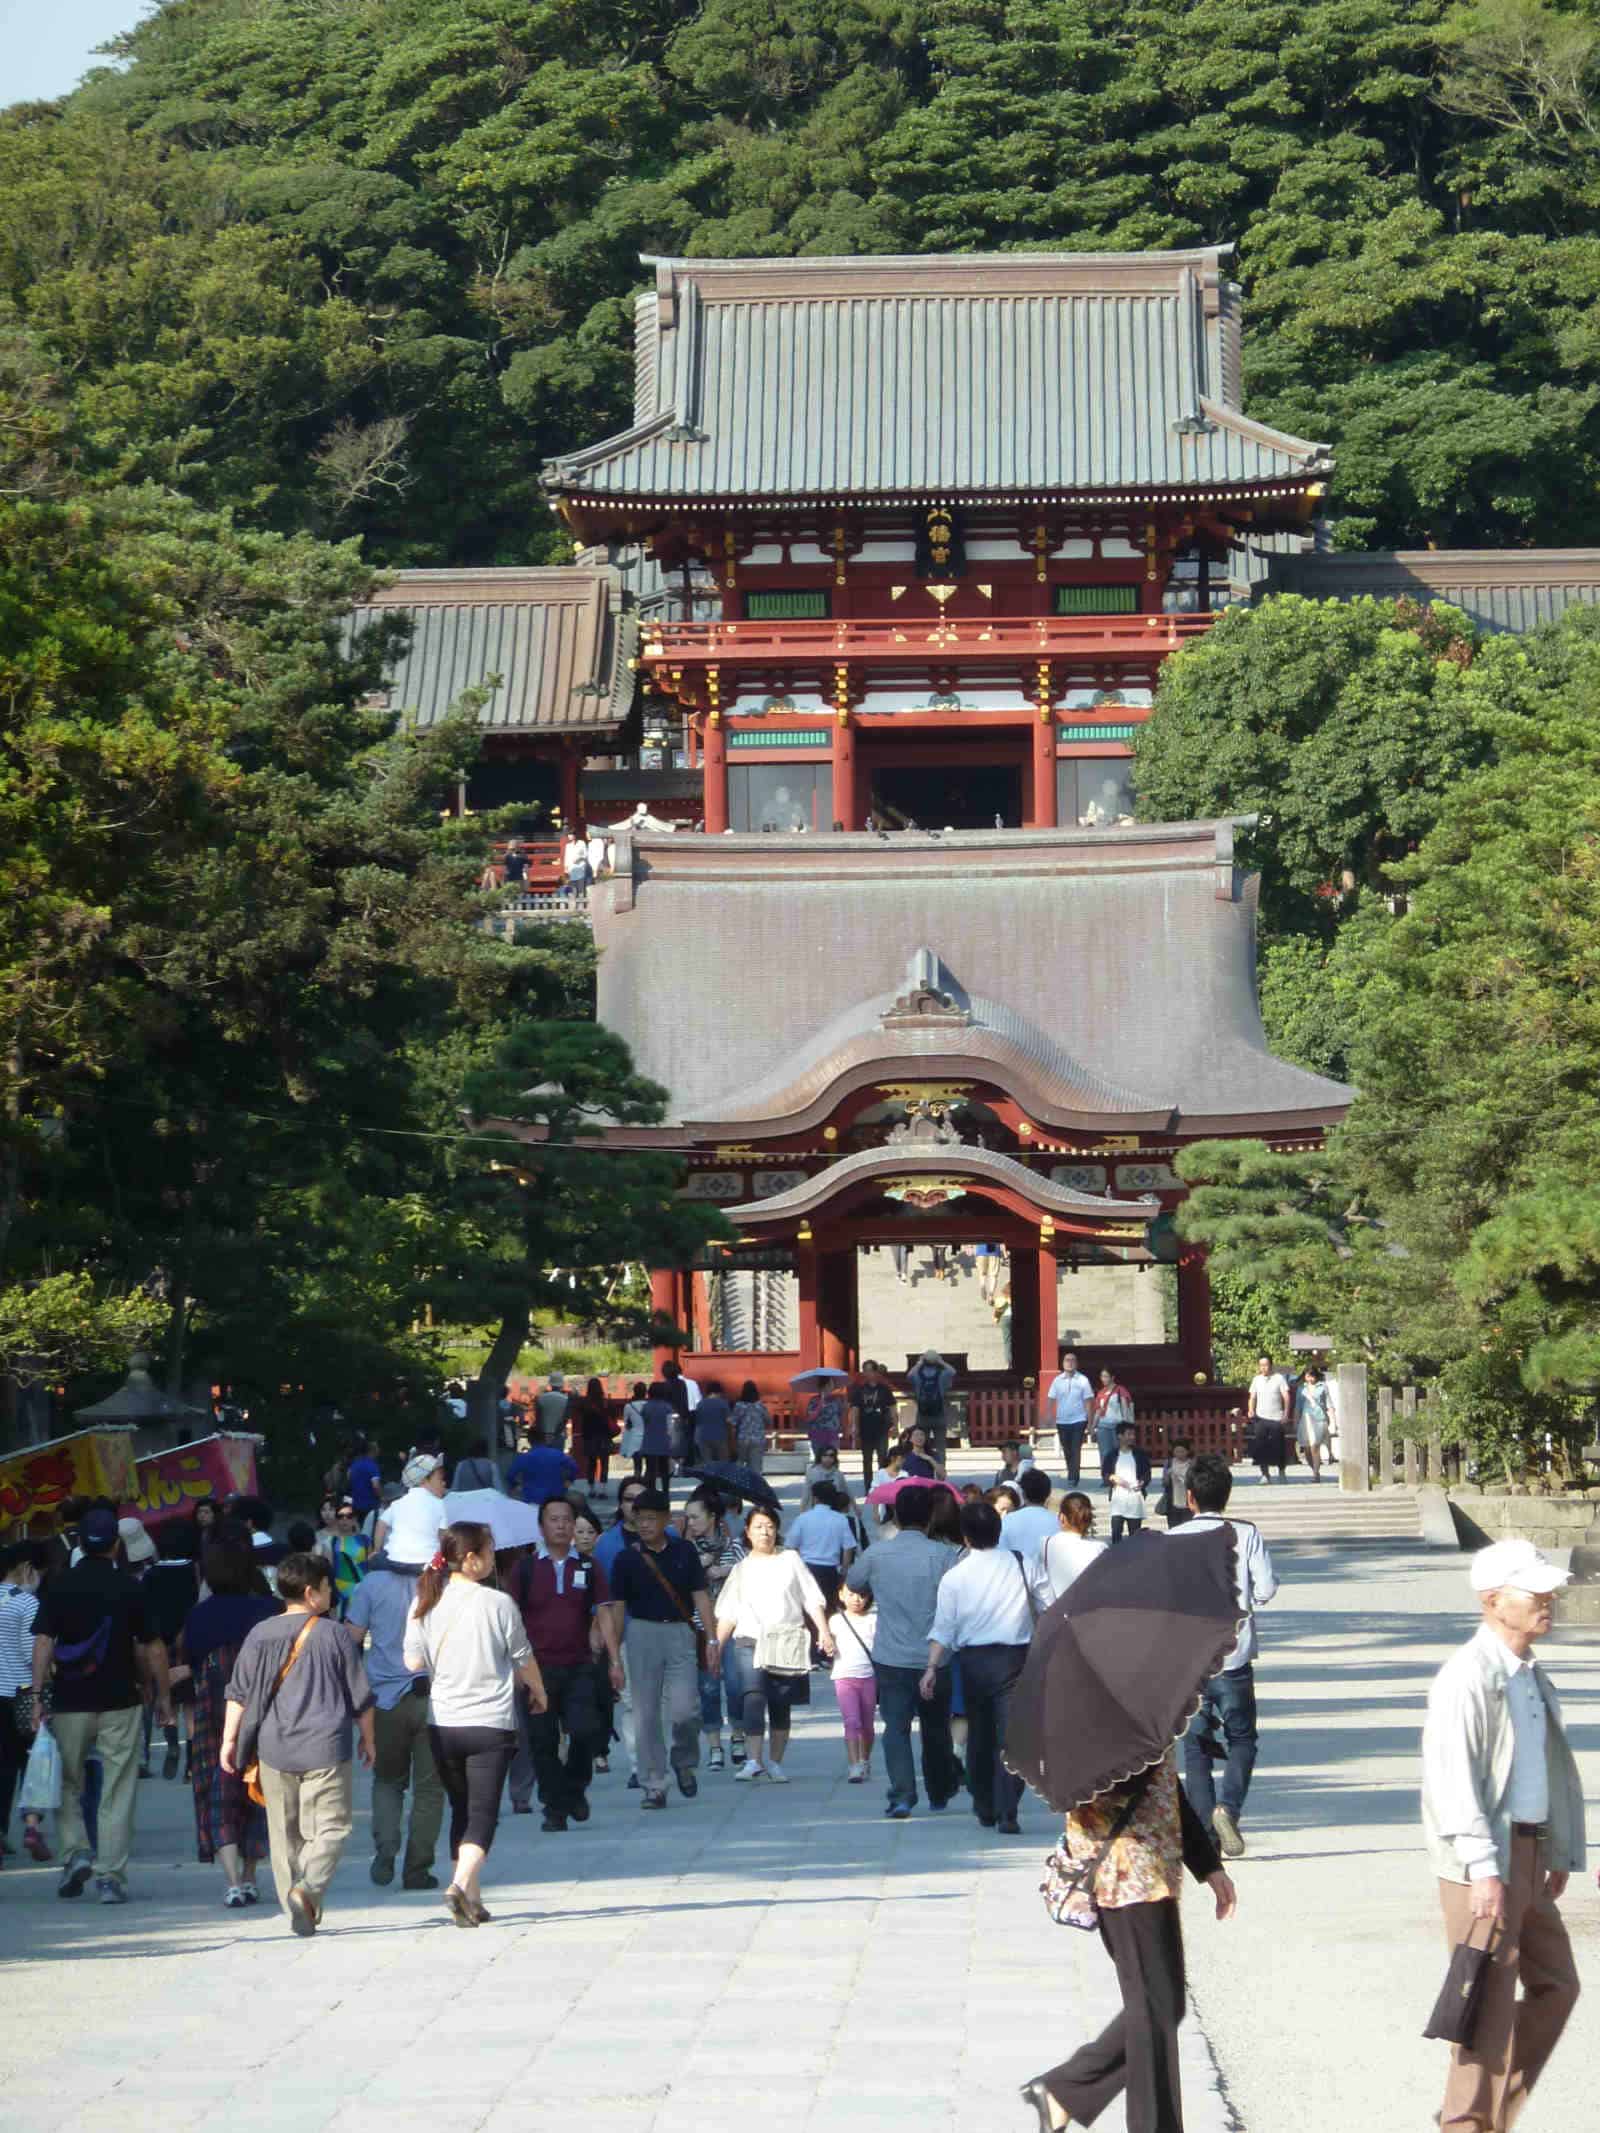 Hachiman shrine in Kamakura